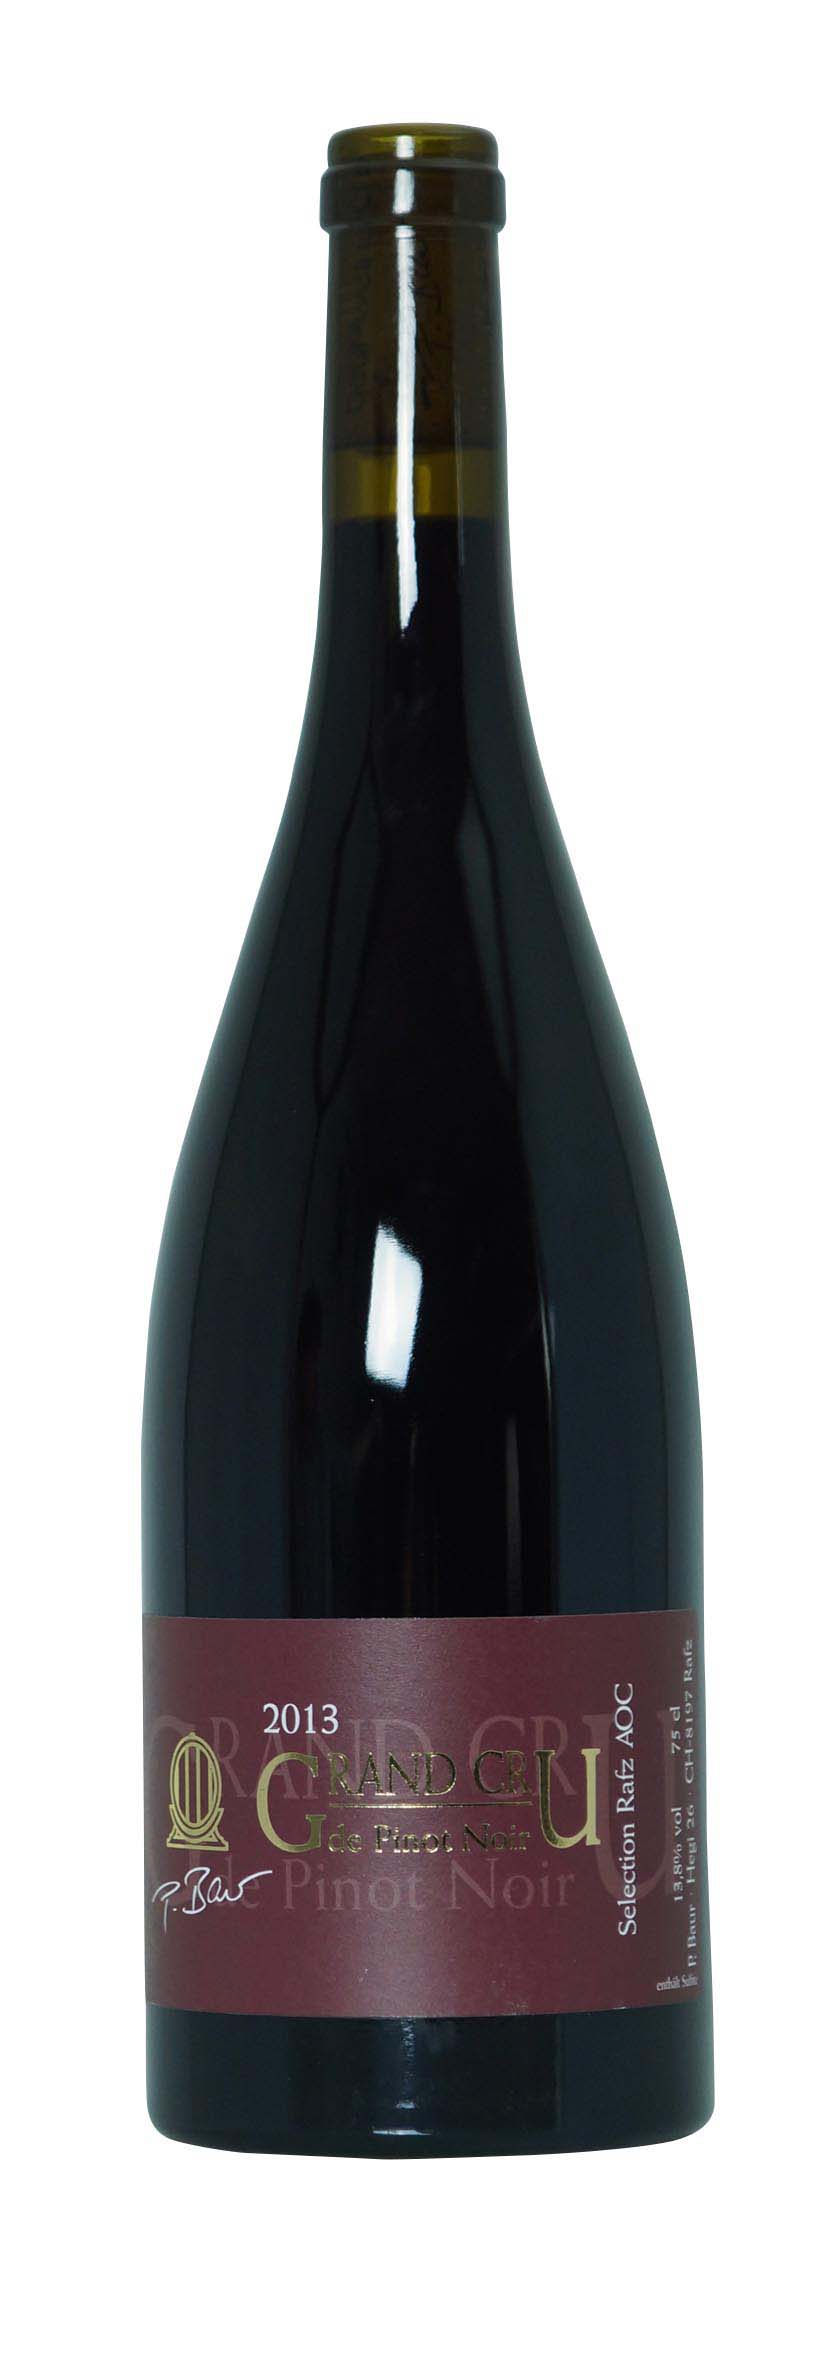 Zürich AOC Grand Cru de Pinot Noir Selection Rafz 2013